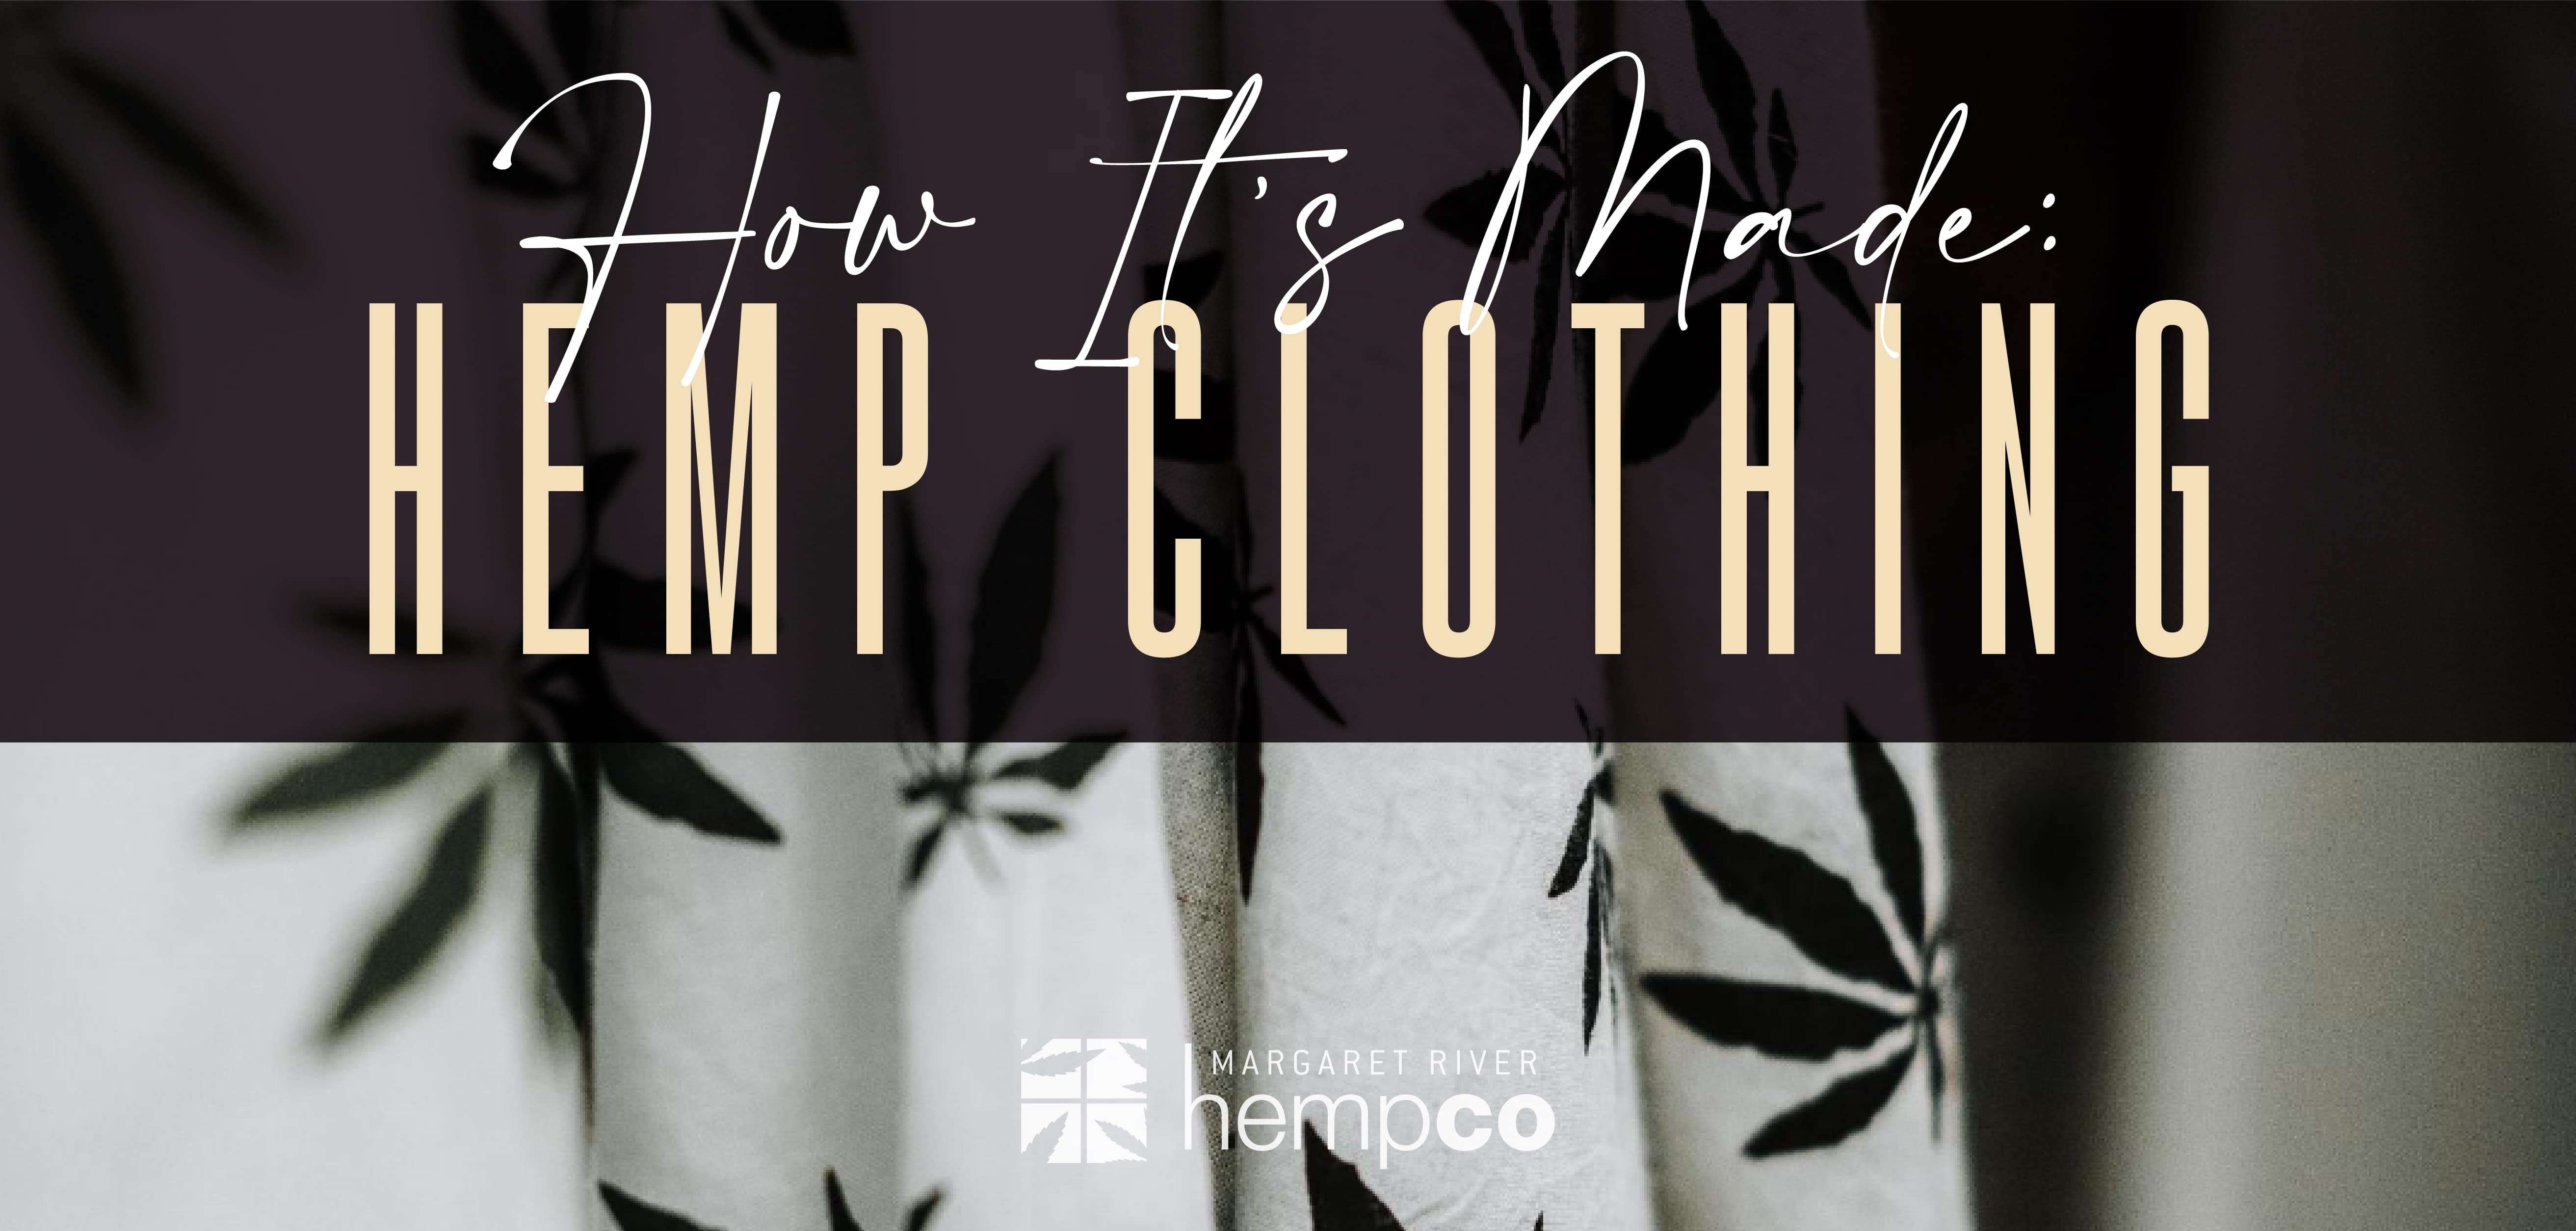 Hemp clothing